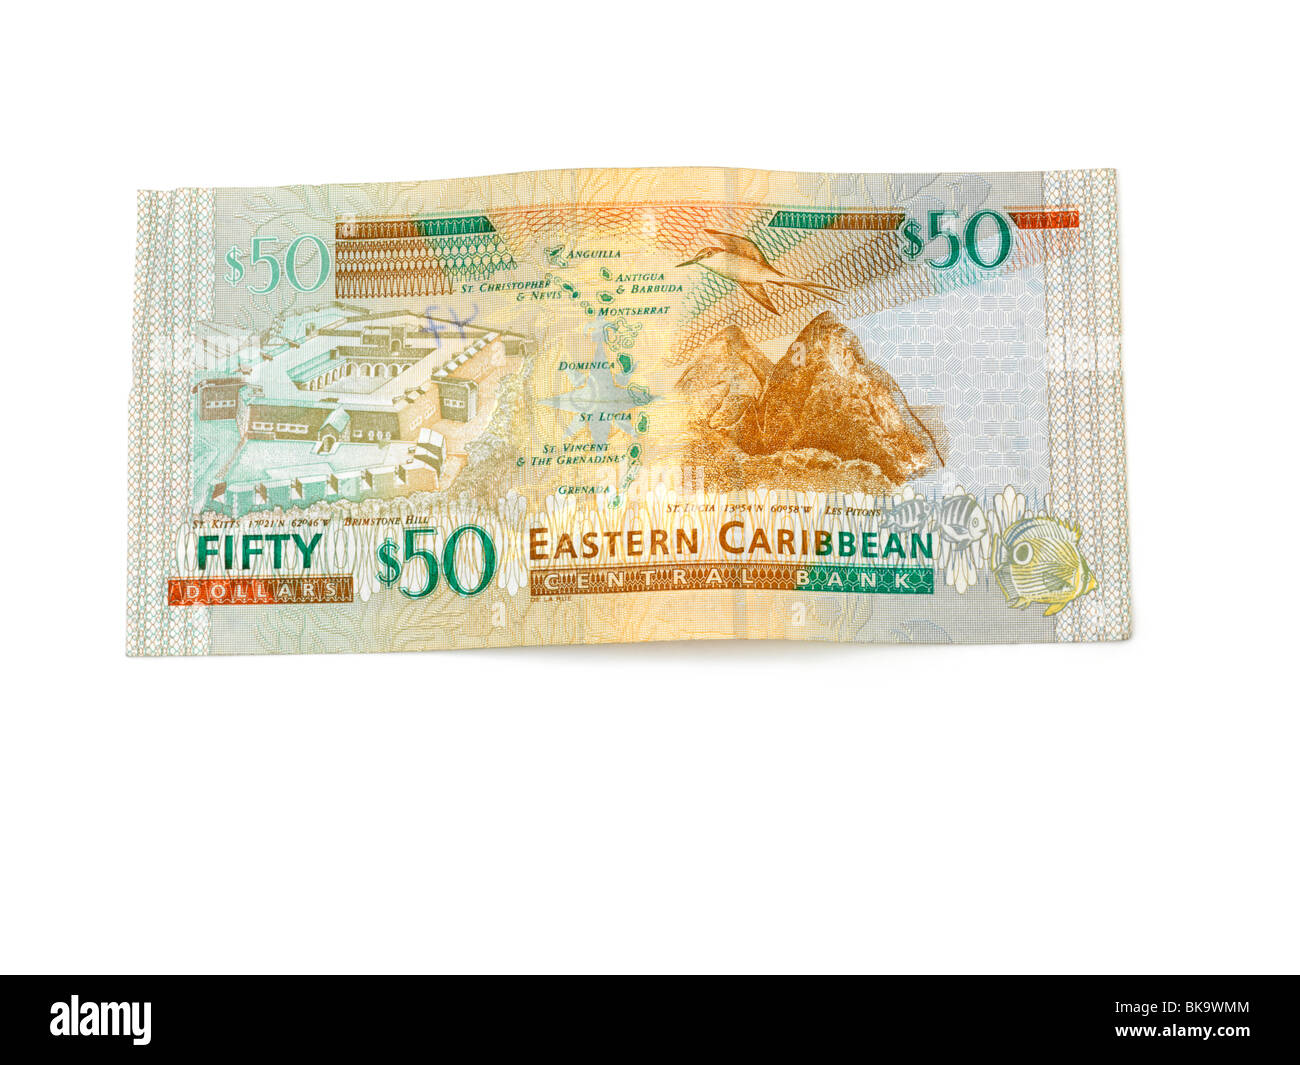 Eastern Caribbean Banknote 50 Dollars Stock Photo